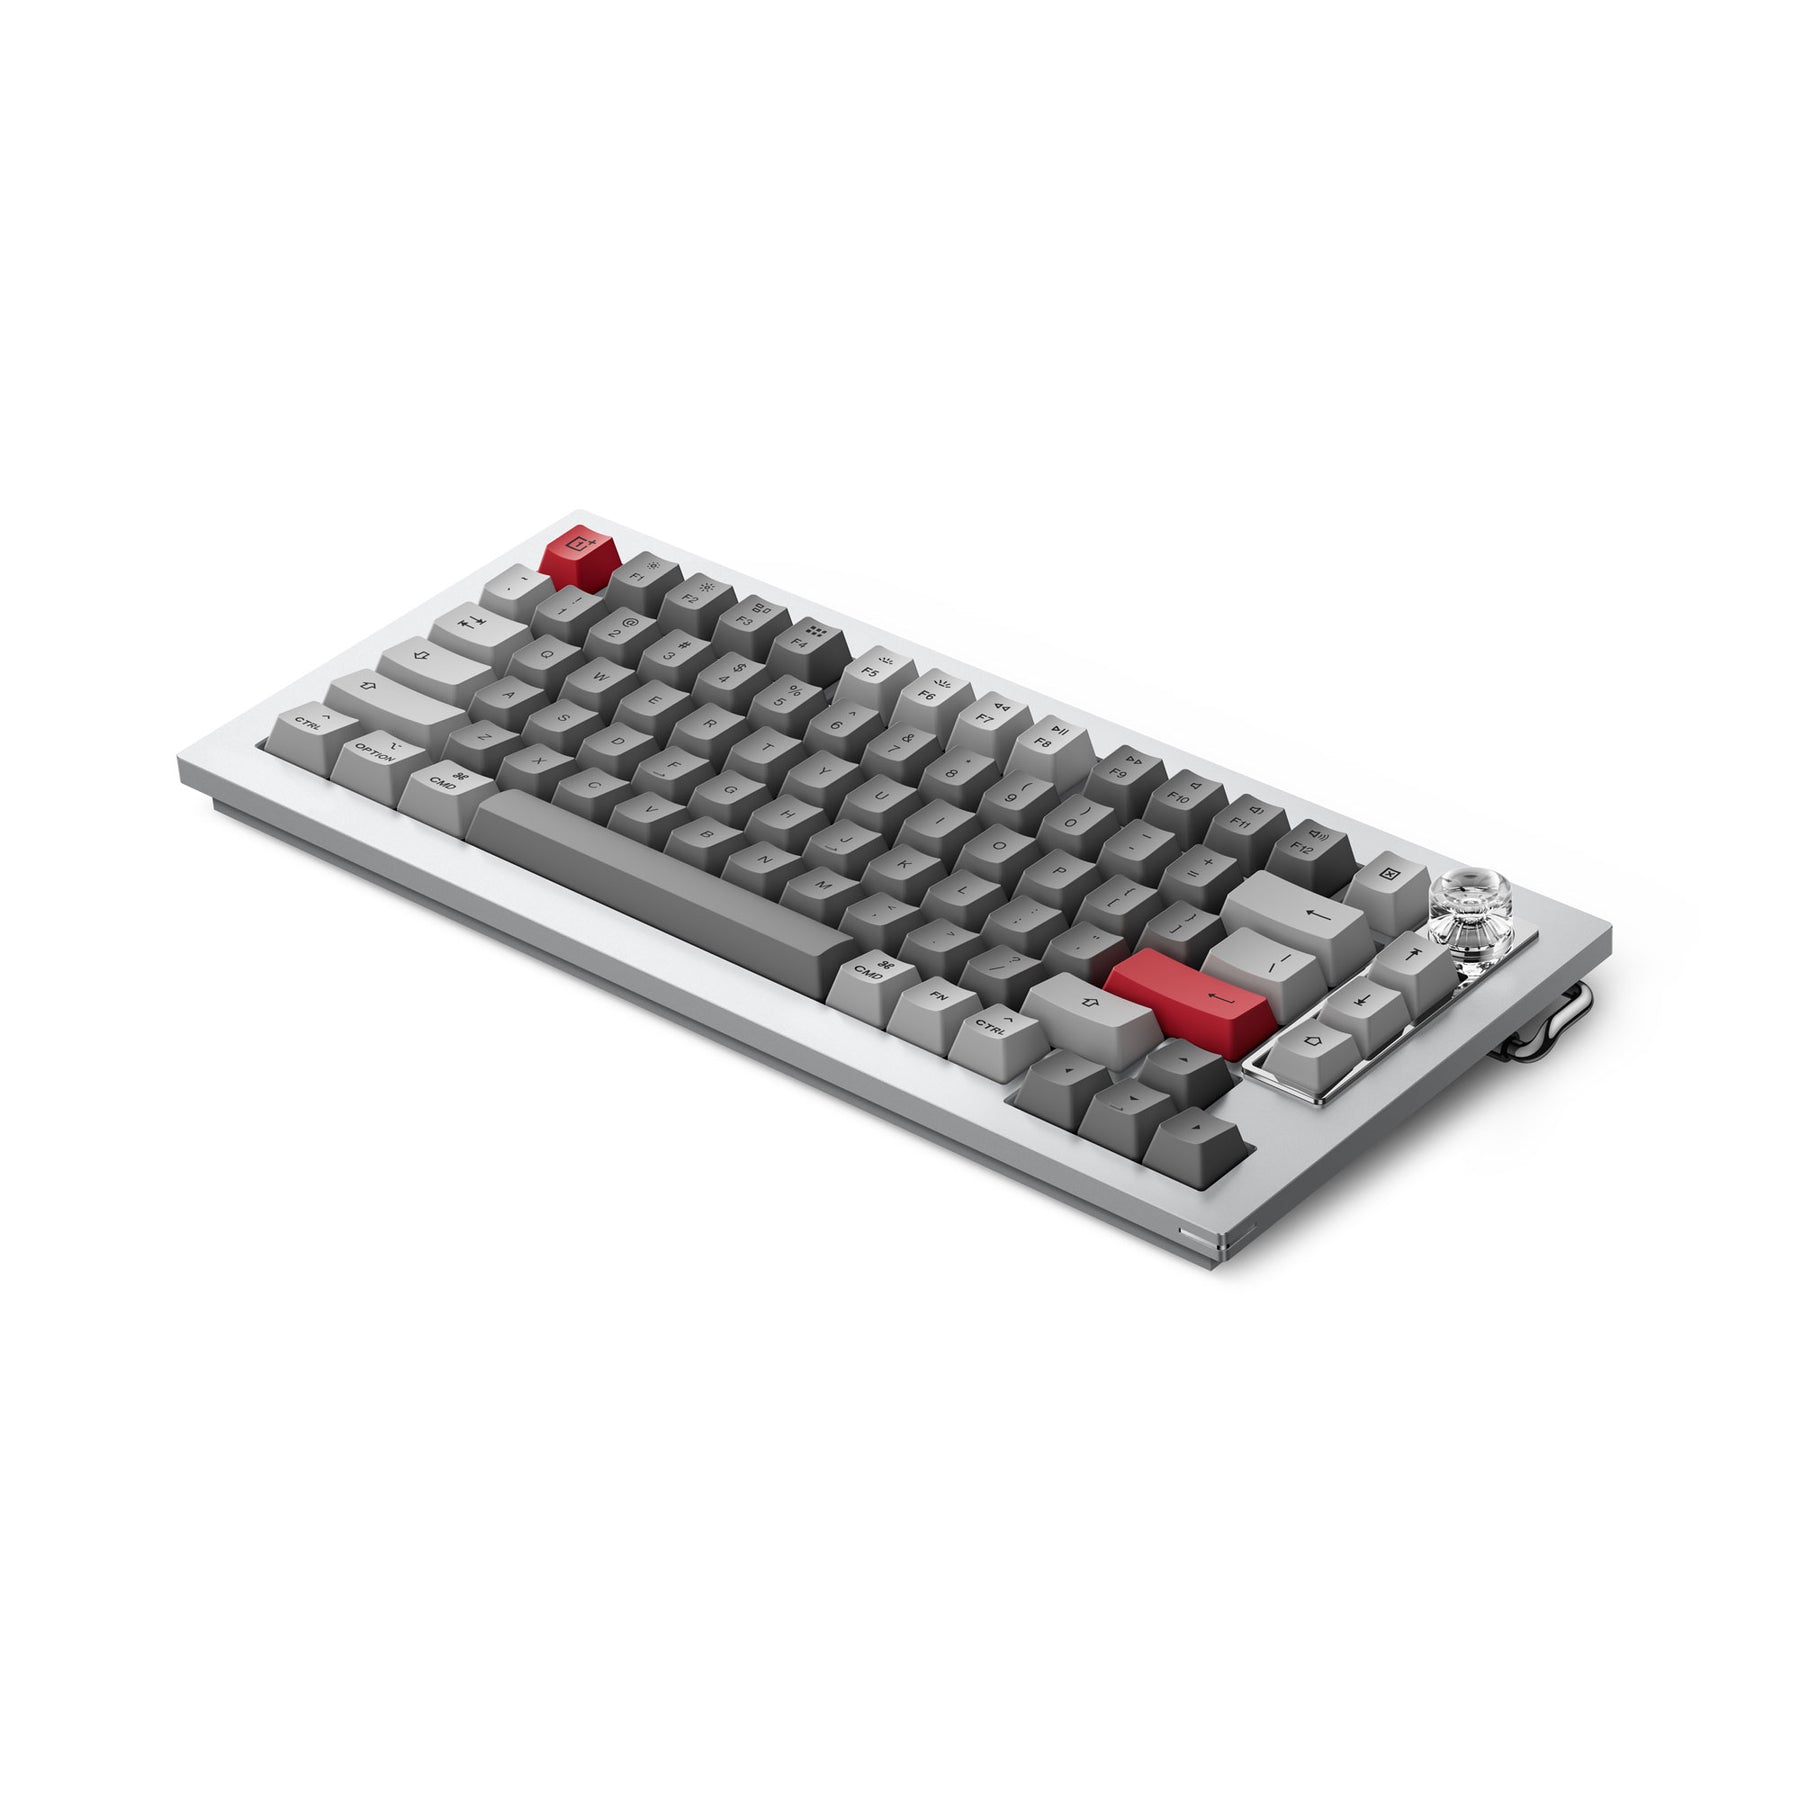 Keyboard 81 Pro QMK/VIA Wireless Custom Mechanical Keyboard